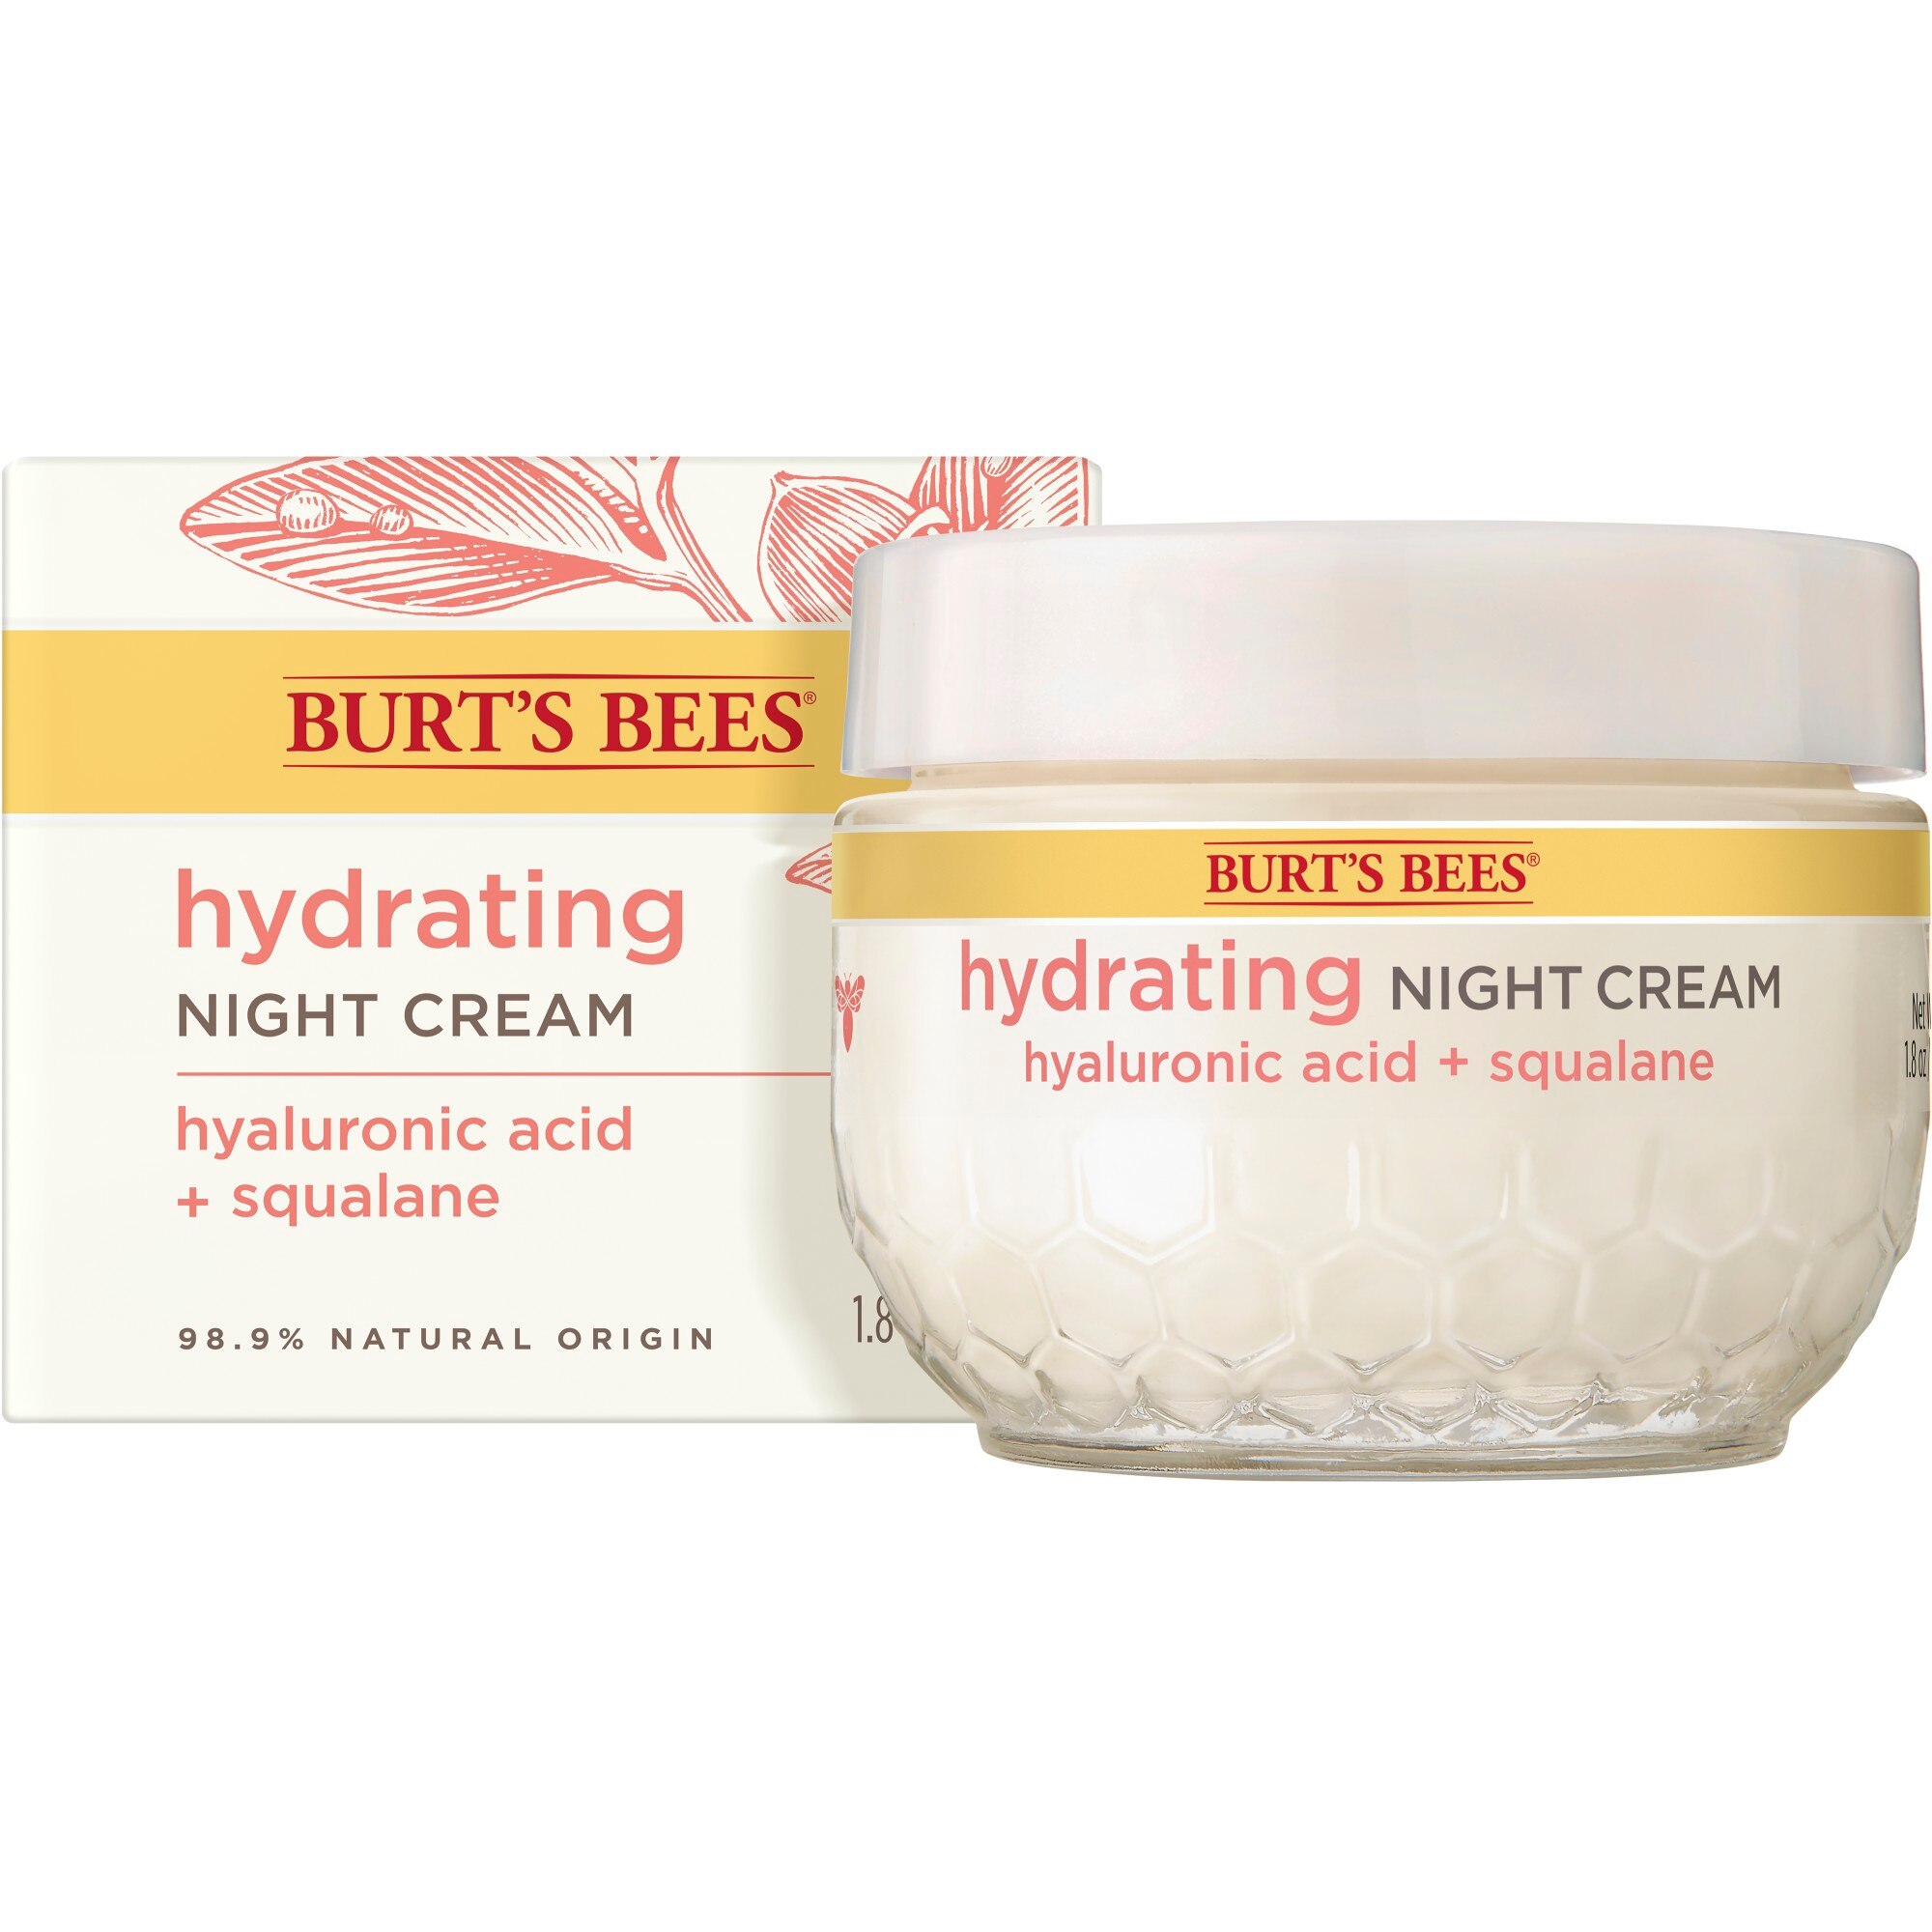 Burt's Bees Hydrating Night Cream, Moisturizer for Normal Skin, 1.8 fl oz